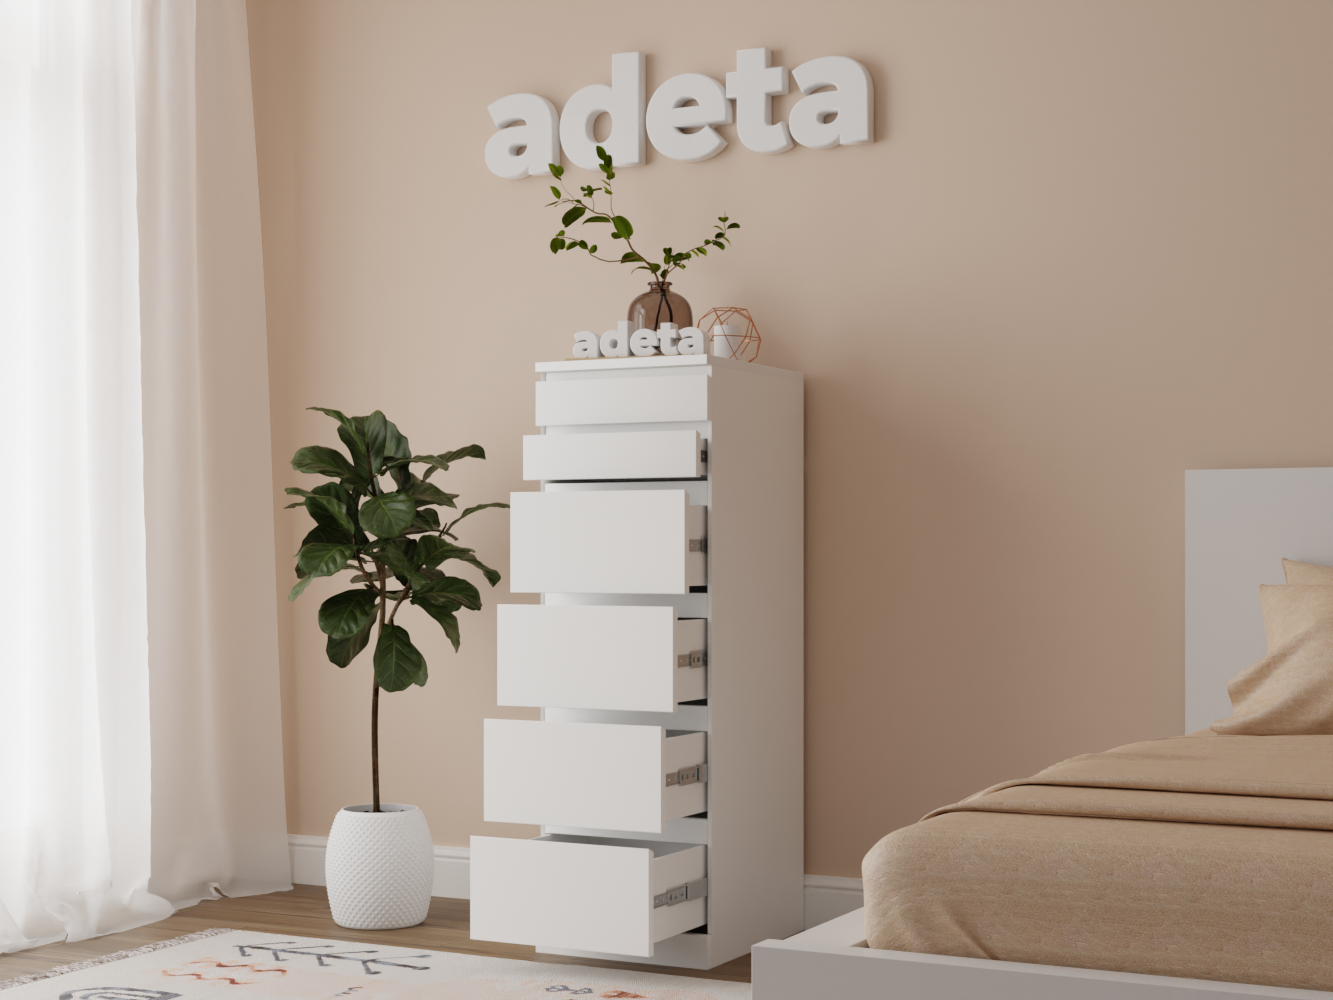 Изображение товара Комод Мальм 28 white ИКЕА (IKEA), 40x48x123 см на сайте adeta.ru